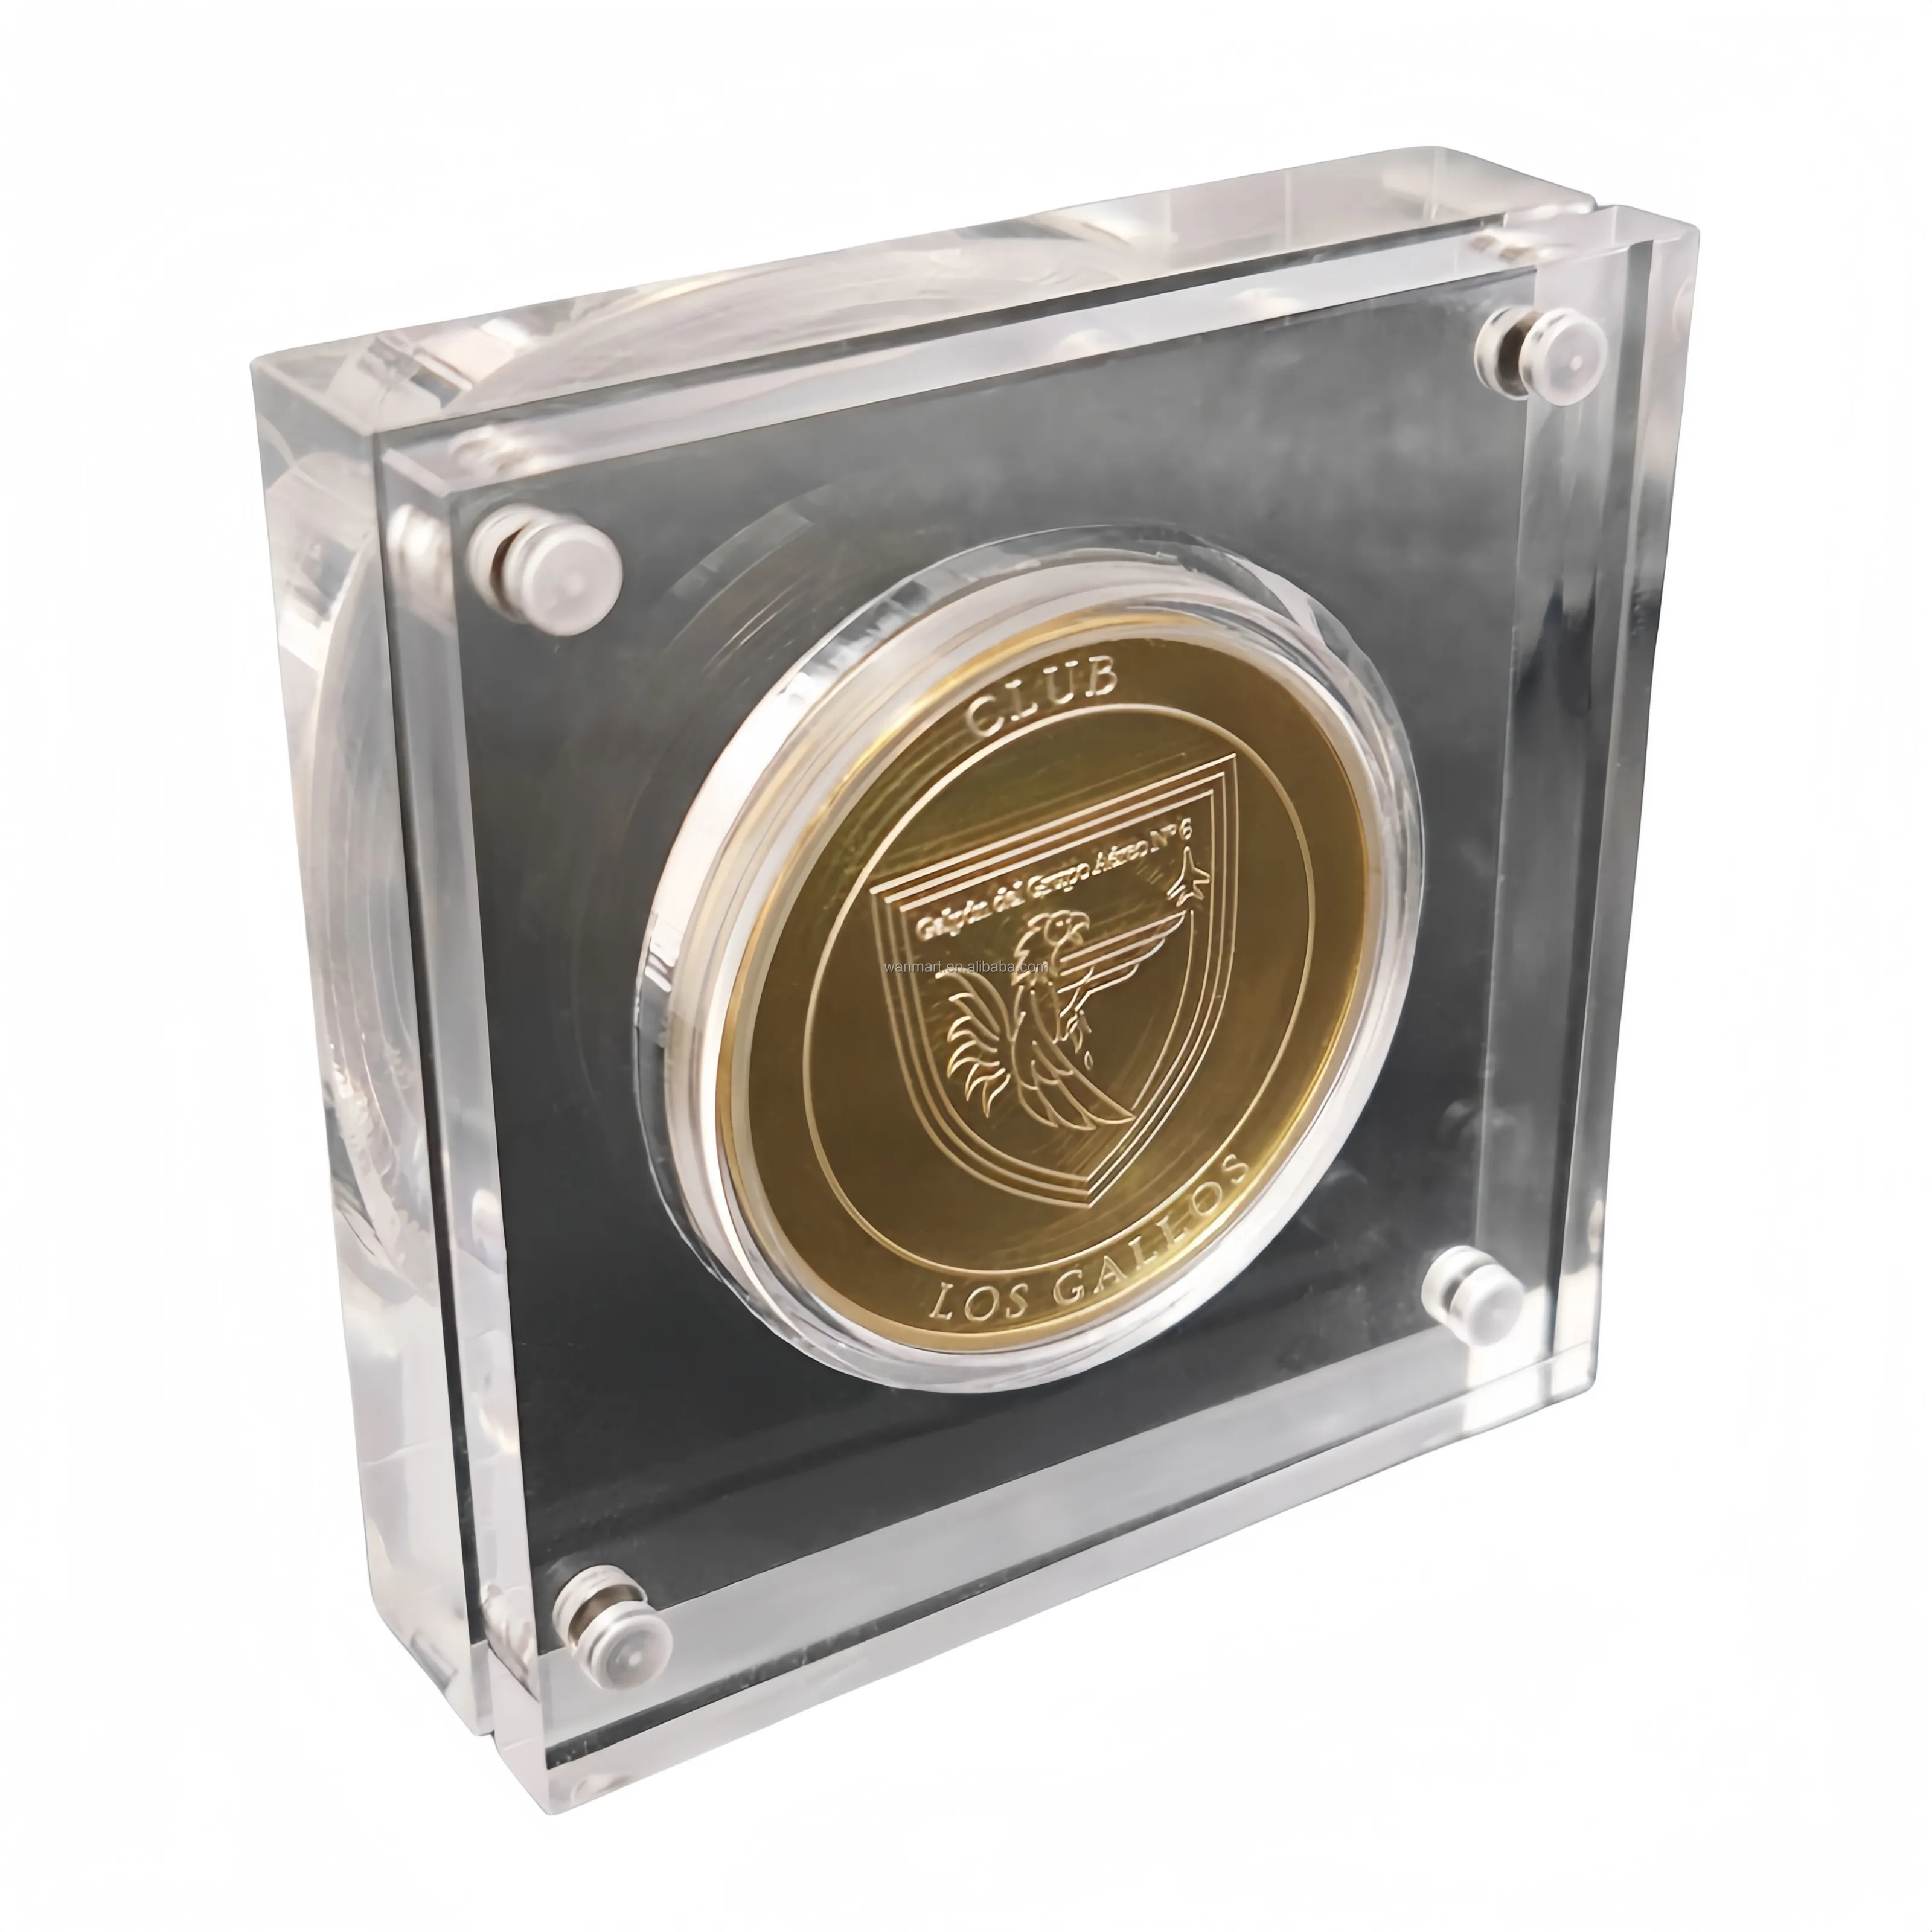 Kotak magnetik tempat pajangan koin akrilik bening tempat kapsul koin akrilik dudukan blok koin akrilik